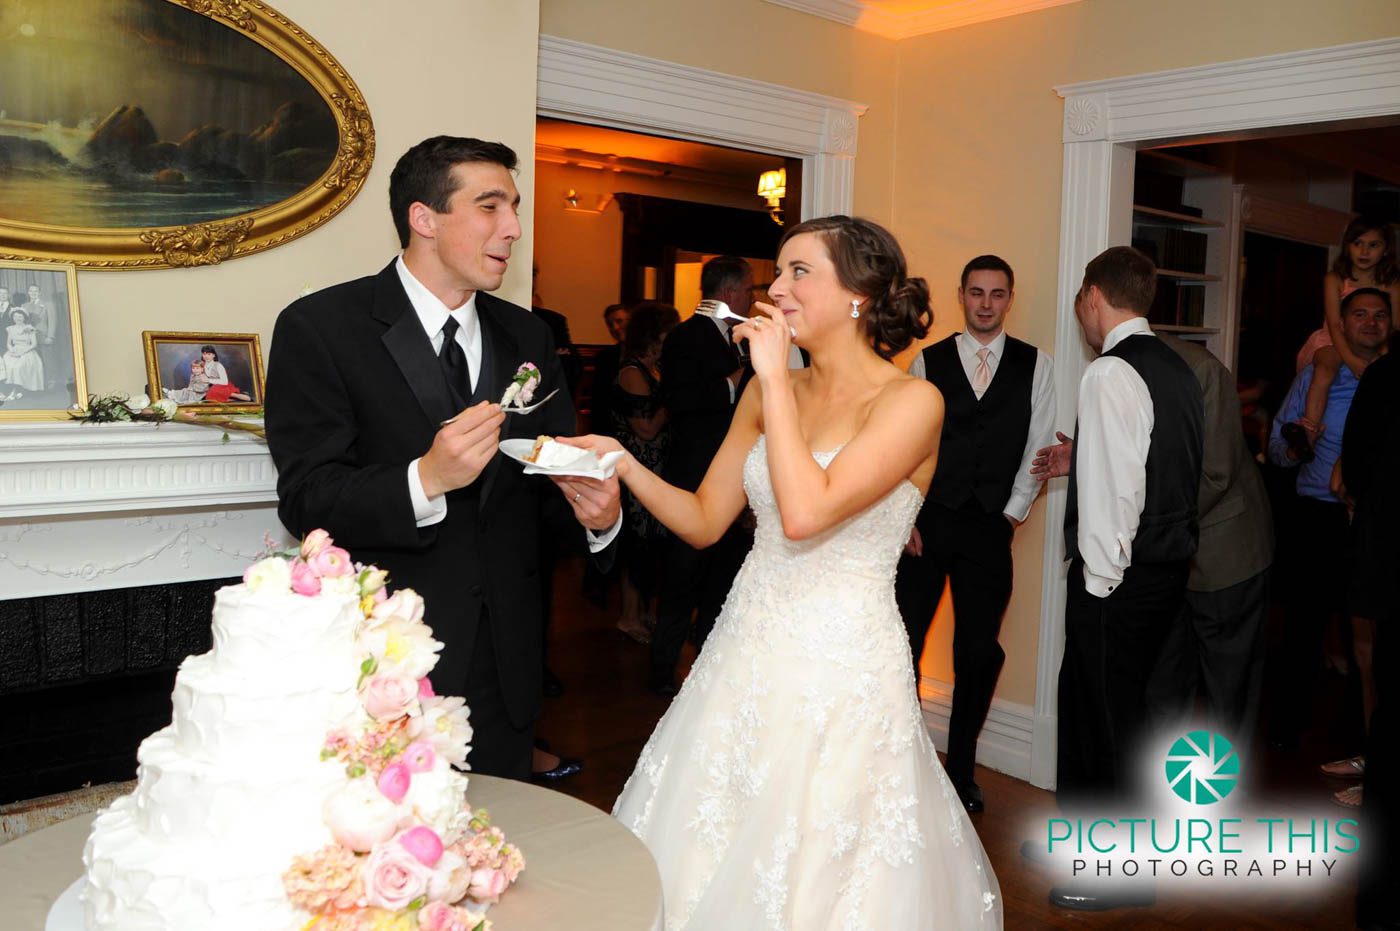 alunmi-bride-groom-laughing-sharing-cake